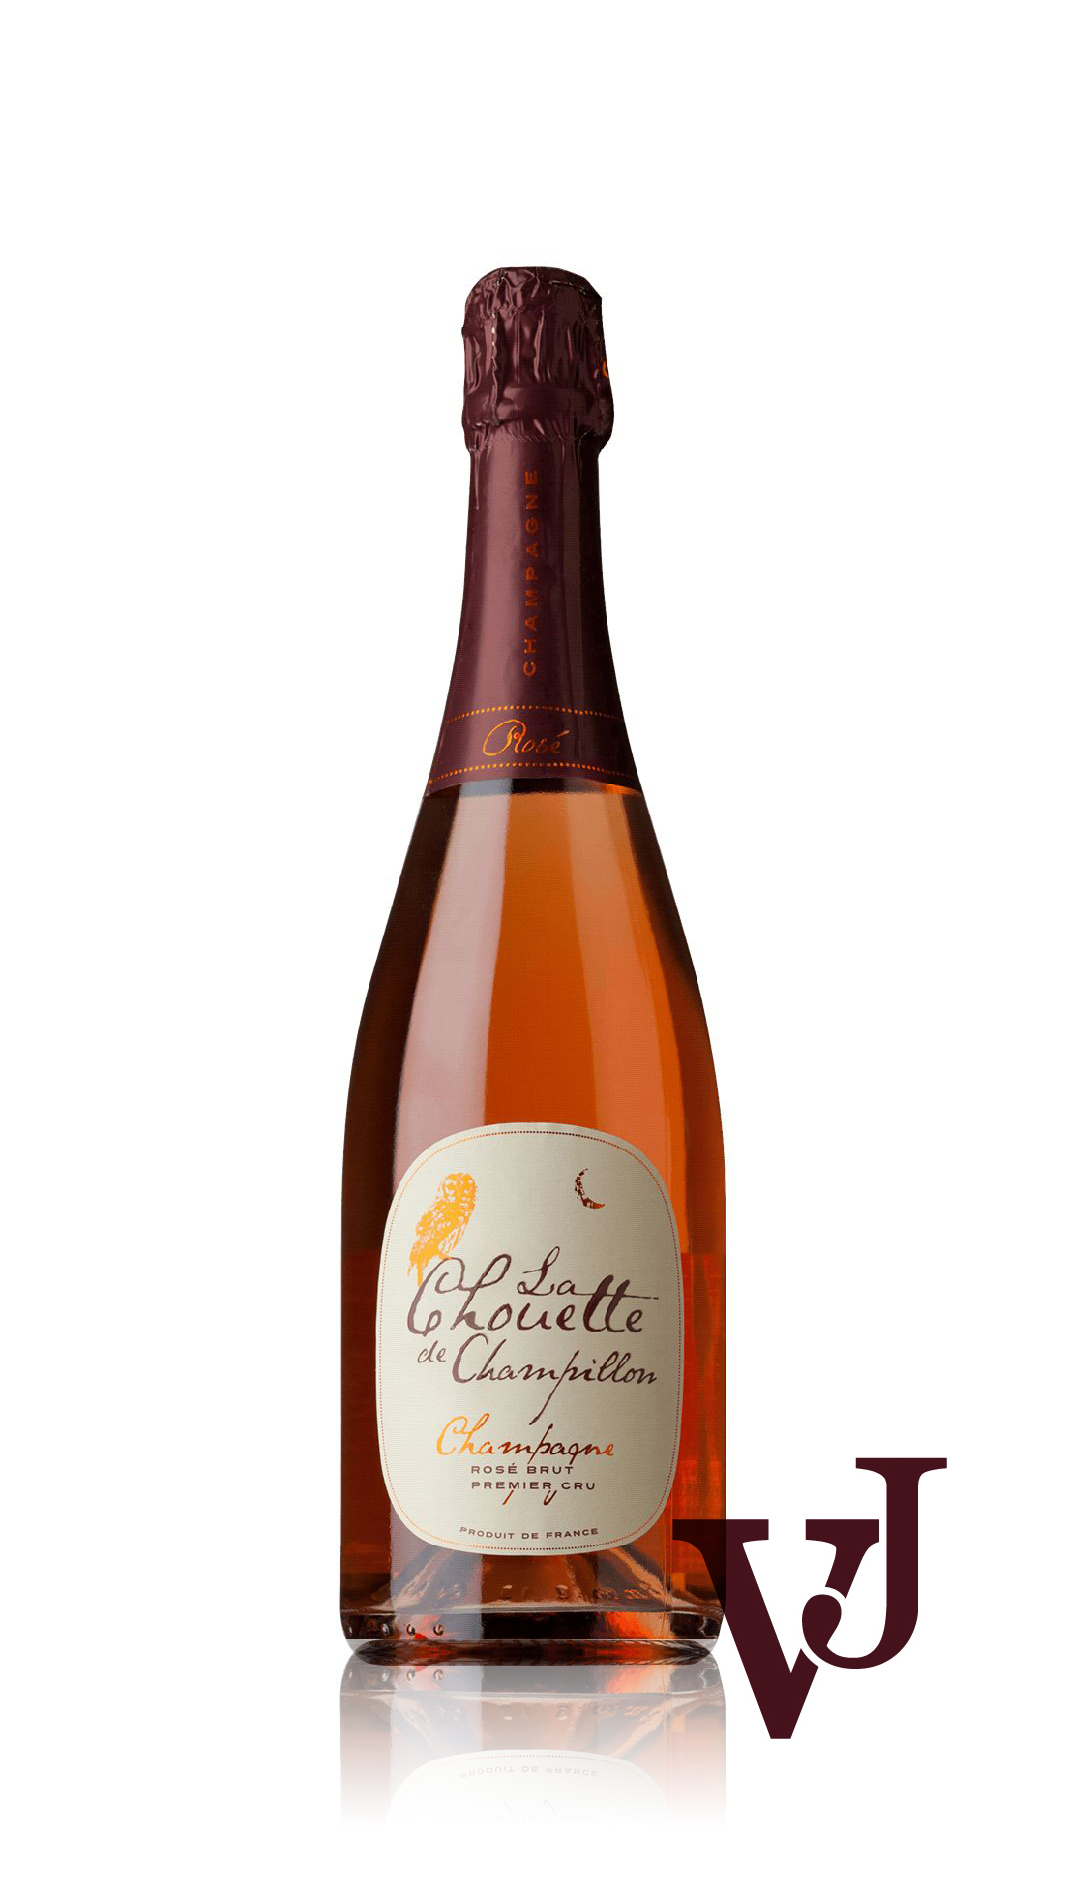 Mousserande Vin - La Chouette de Champillion Premier Cru Rosé Brut artikel nummer 7435901 från producenten Les Vignobles Champenois från området Frankrike